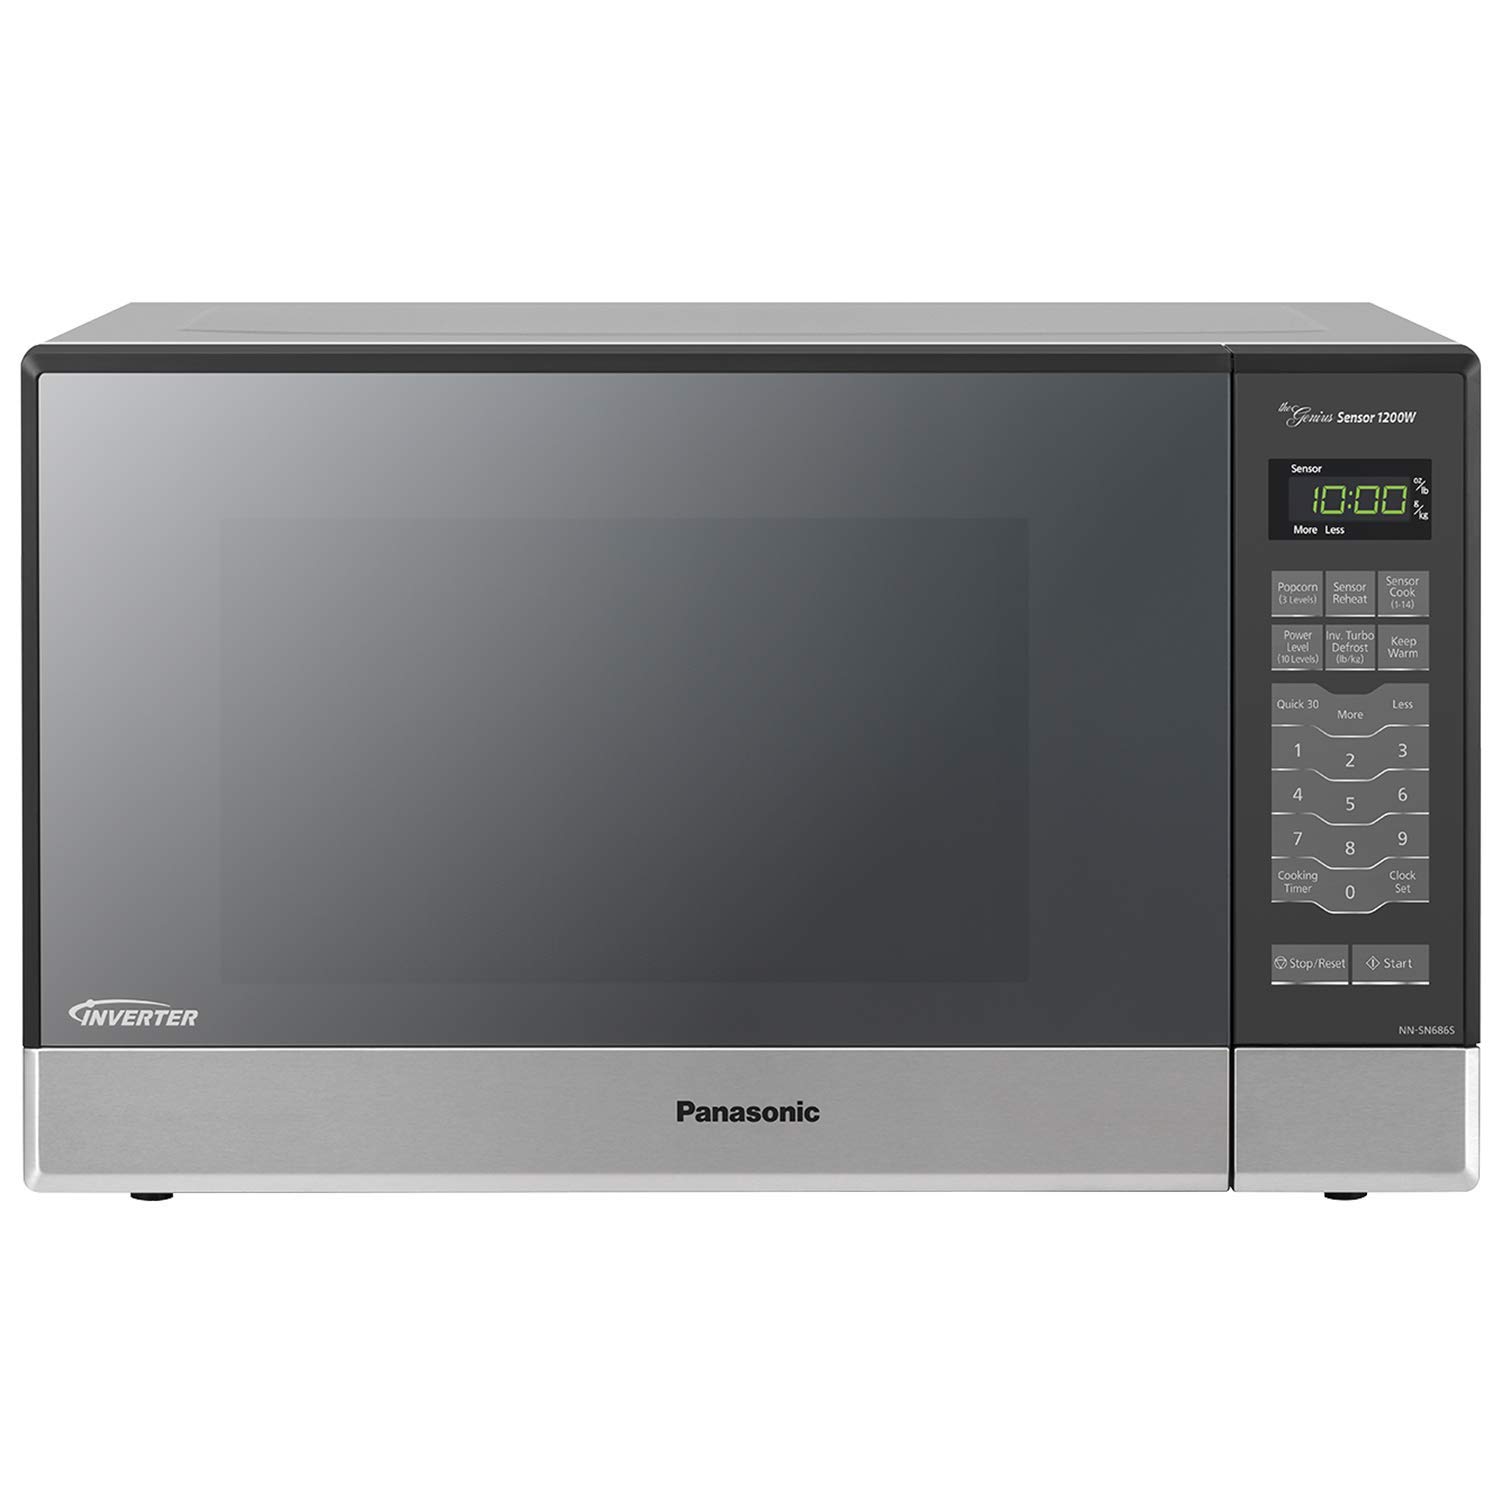 Panasonic NN-SN686S 1200 Watts 1.2 Cu. Ft. Countertop Microwave Oven (Inverter Technology and Genius Sensor)